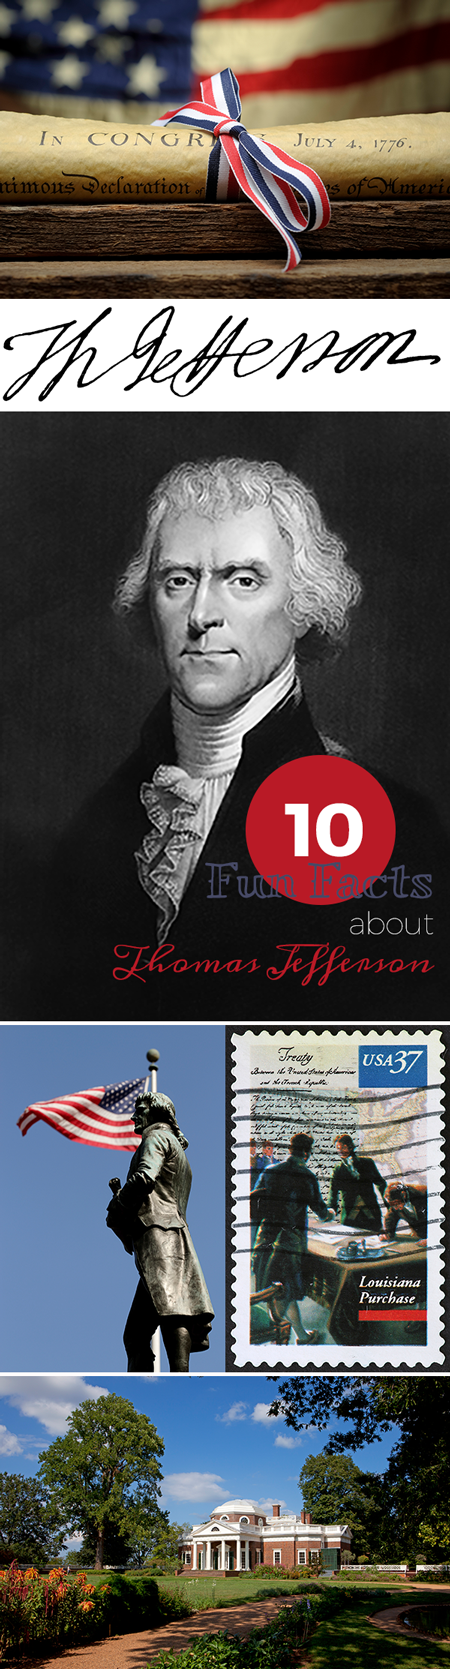 10 Fun Facts about Thomas Jefferson pin